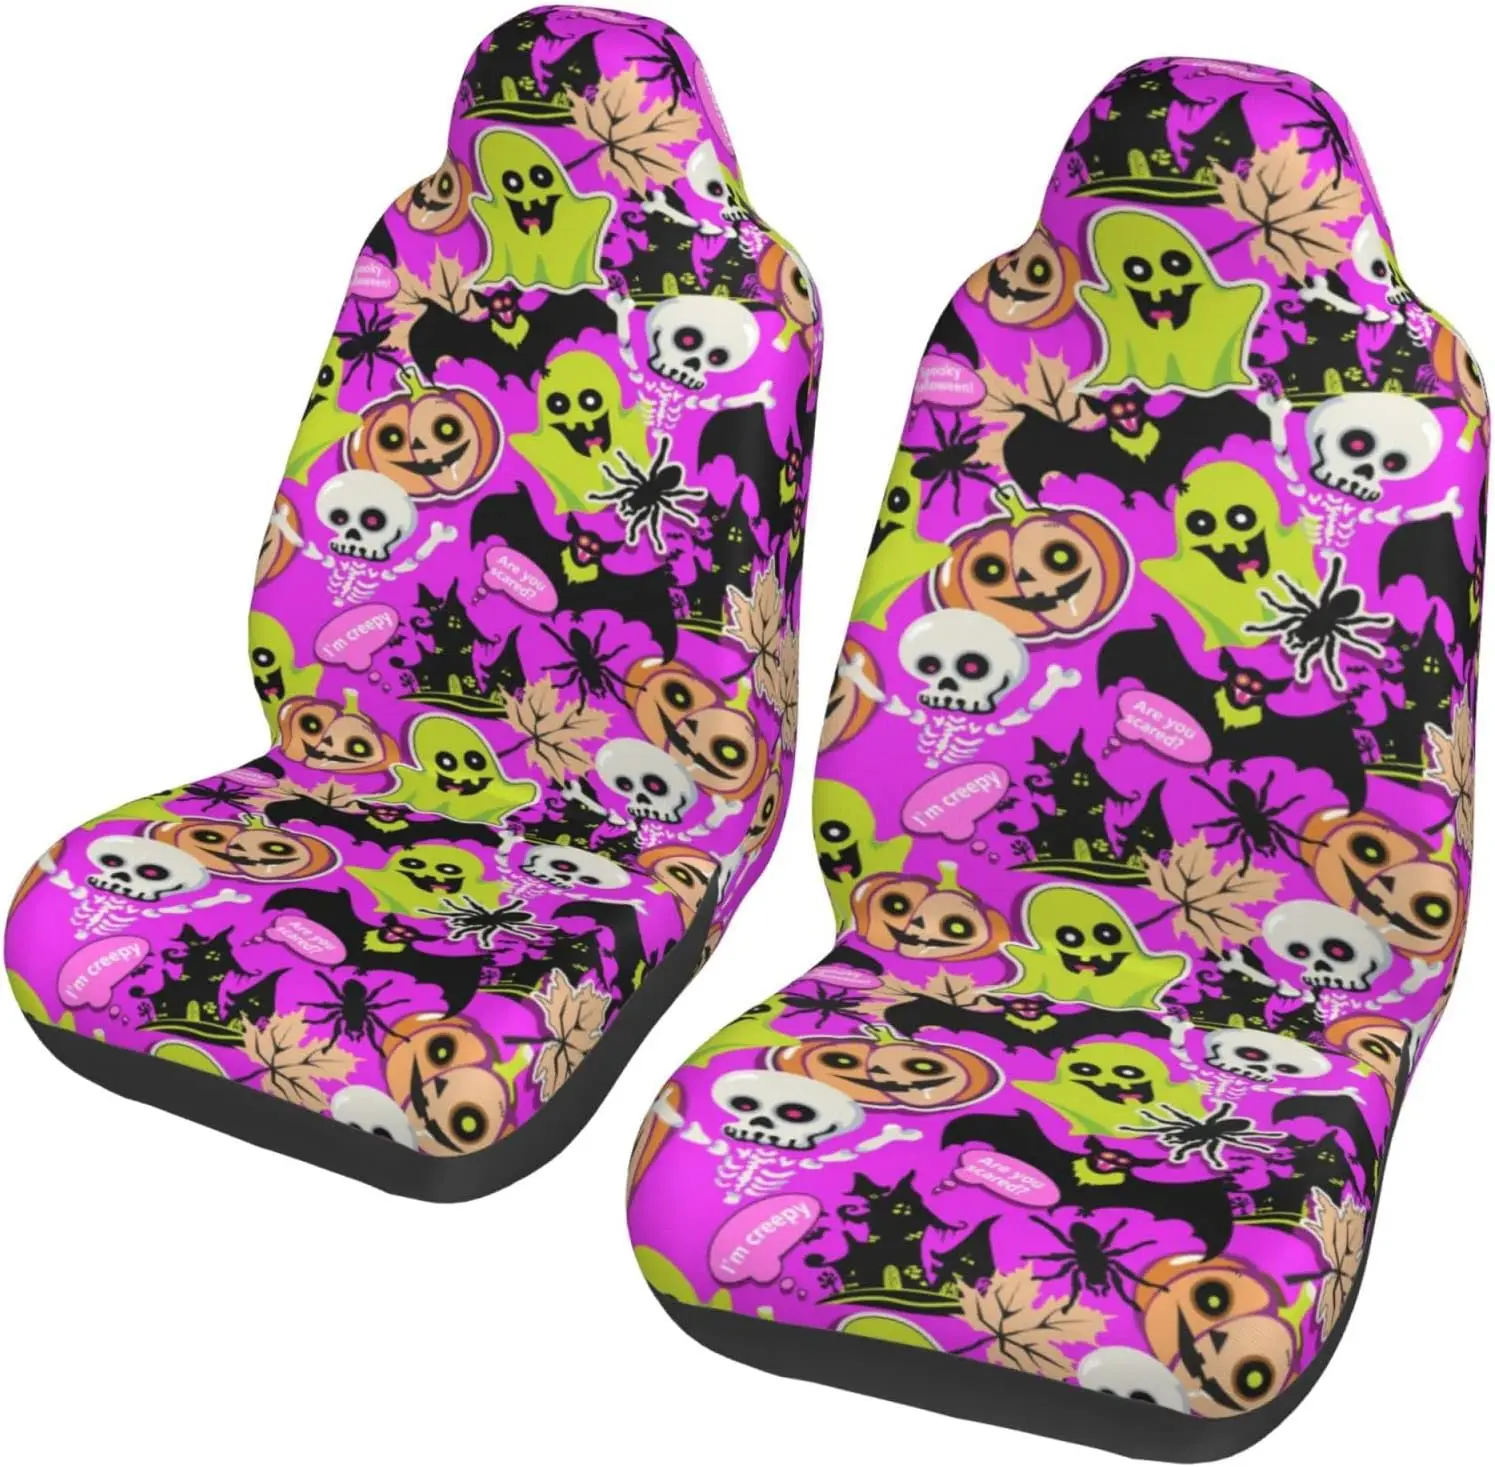 https://ae01.alicdn.com/kf/Sba2669c3e34847bebccf3118c0e2f1a2W/Halloween-Car-Seat-Covers-Front-Seats-Only-Cute-Spooky-Cartoon-Bat-Ghost-Skull-Halloween-Interior-Seat.jpg